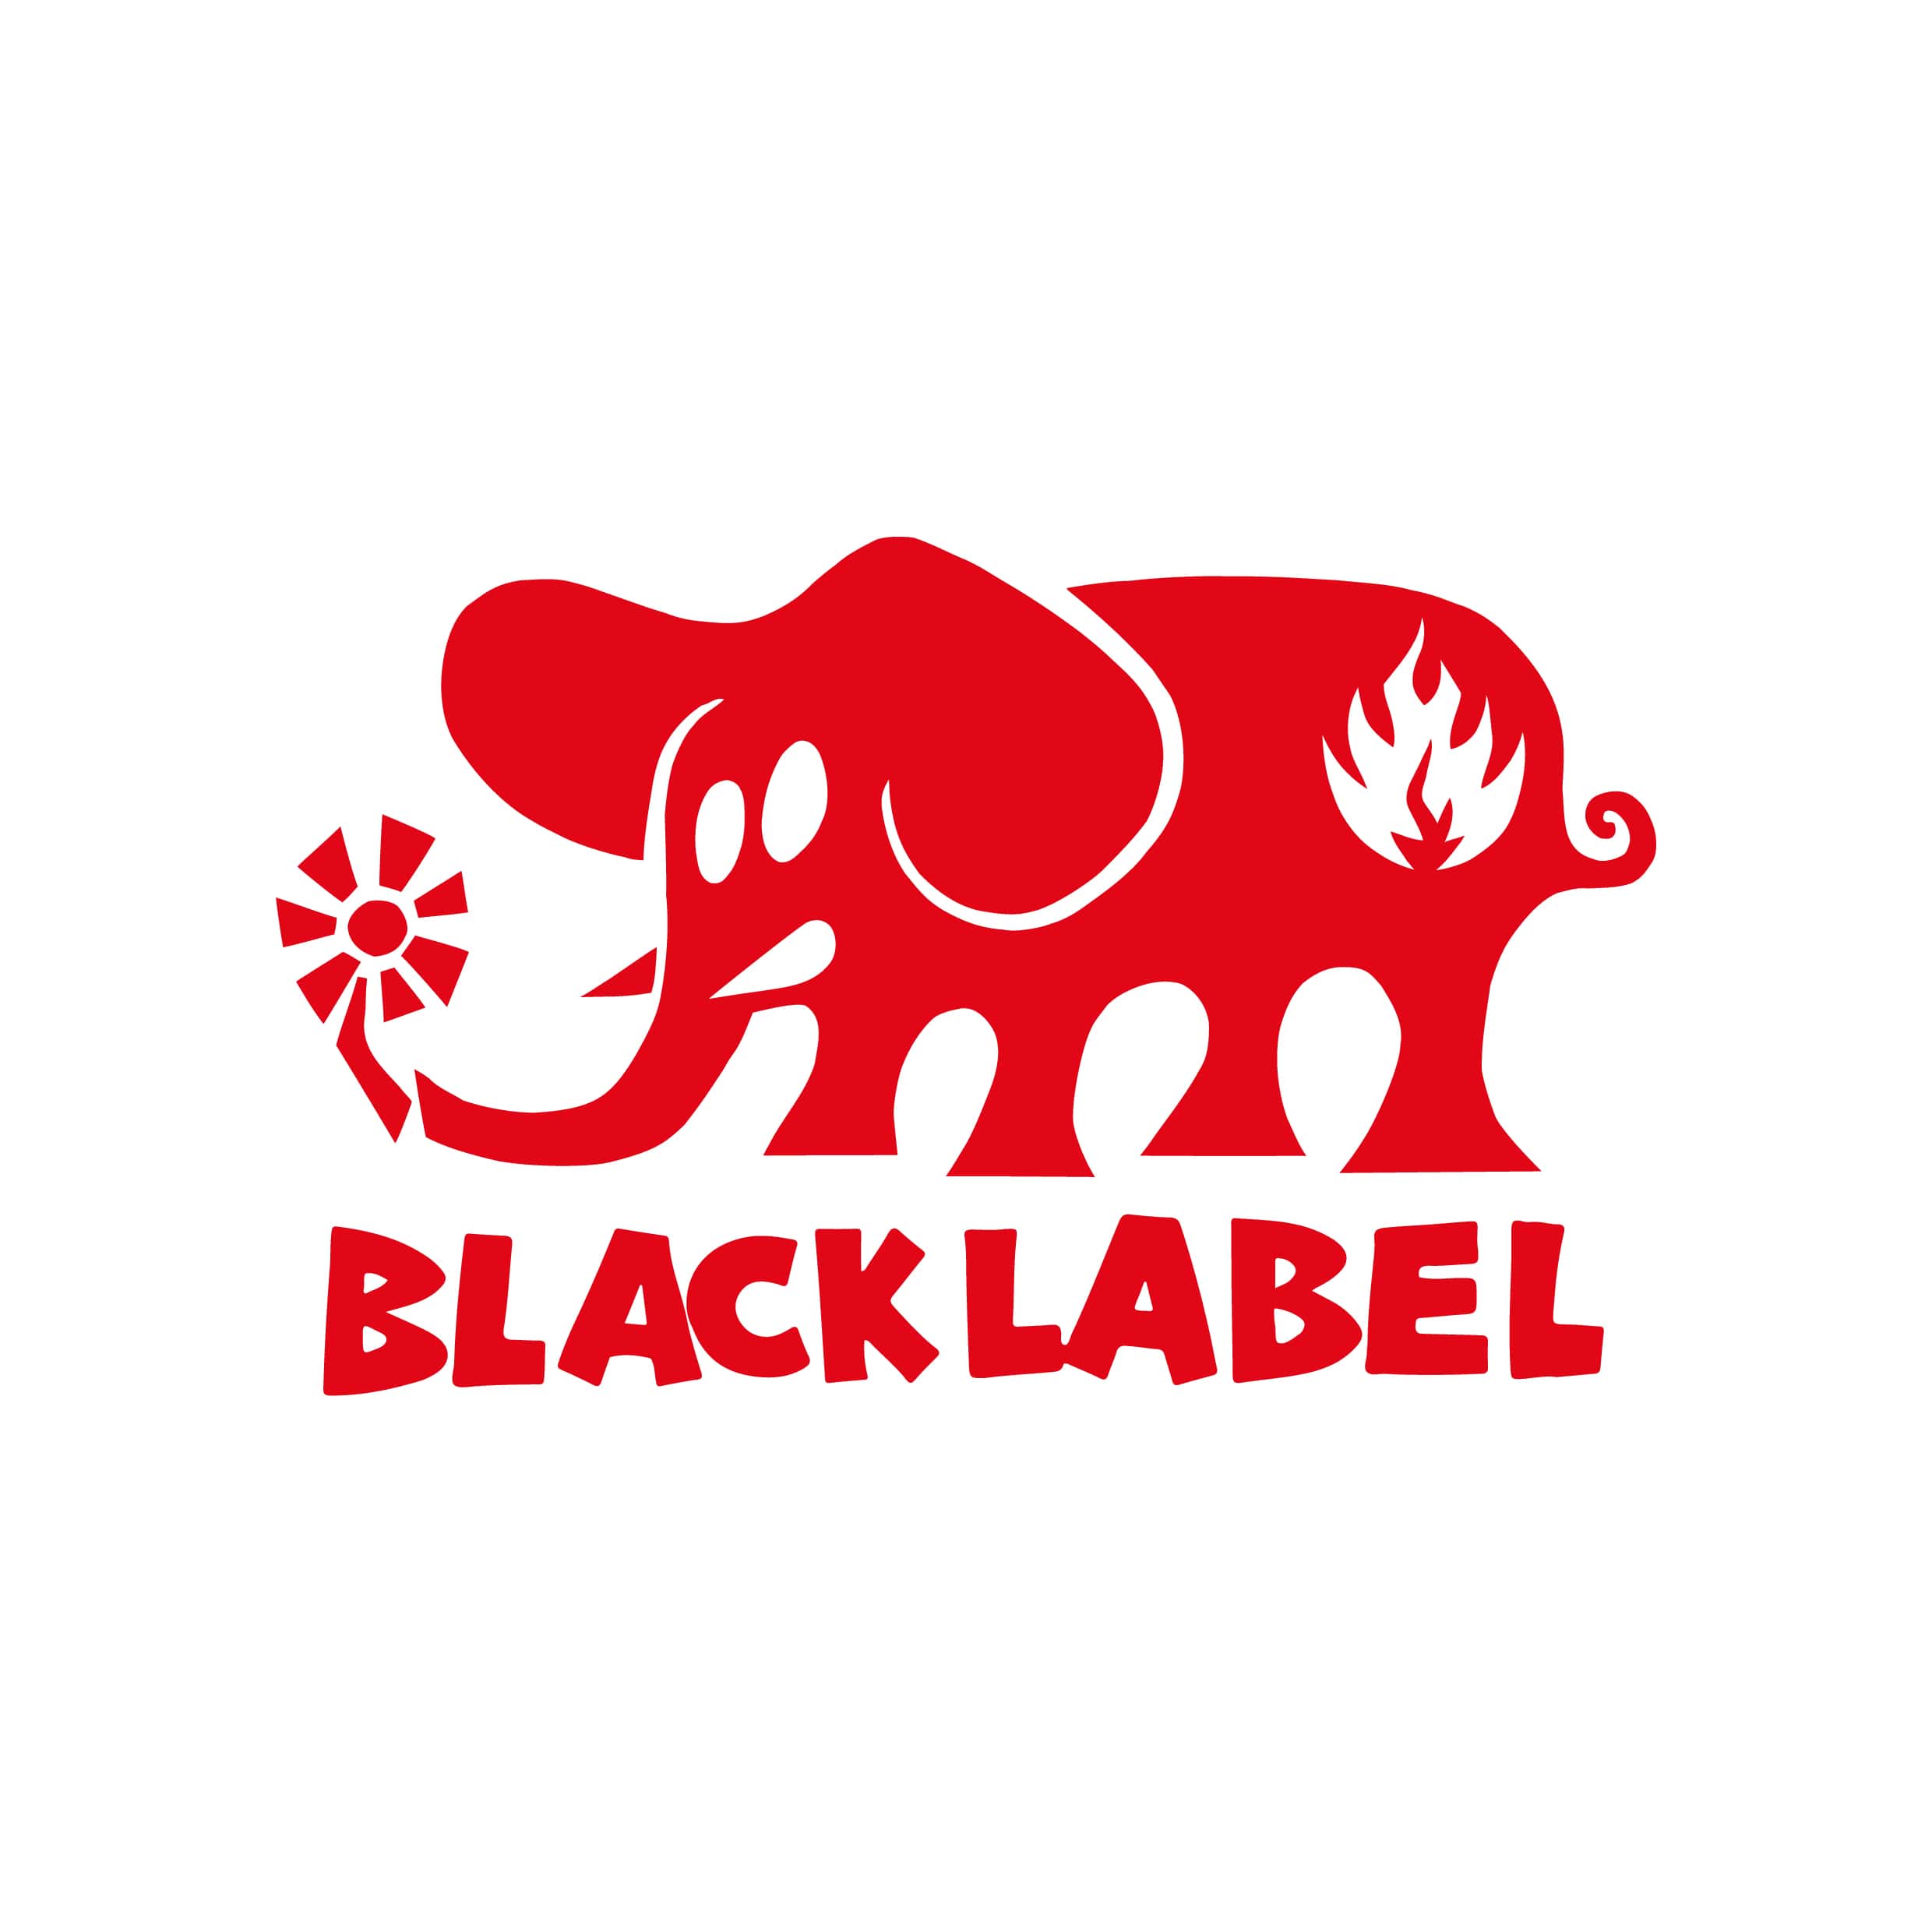 stickers-black-label-ref1-skate-skateboard-sport-extreme-autocollant-sticker-blacklabel-auto-planche-autocollants-decals-sponsors-logo-min